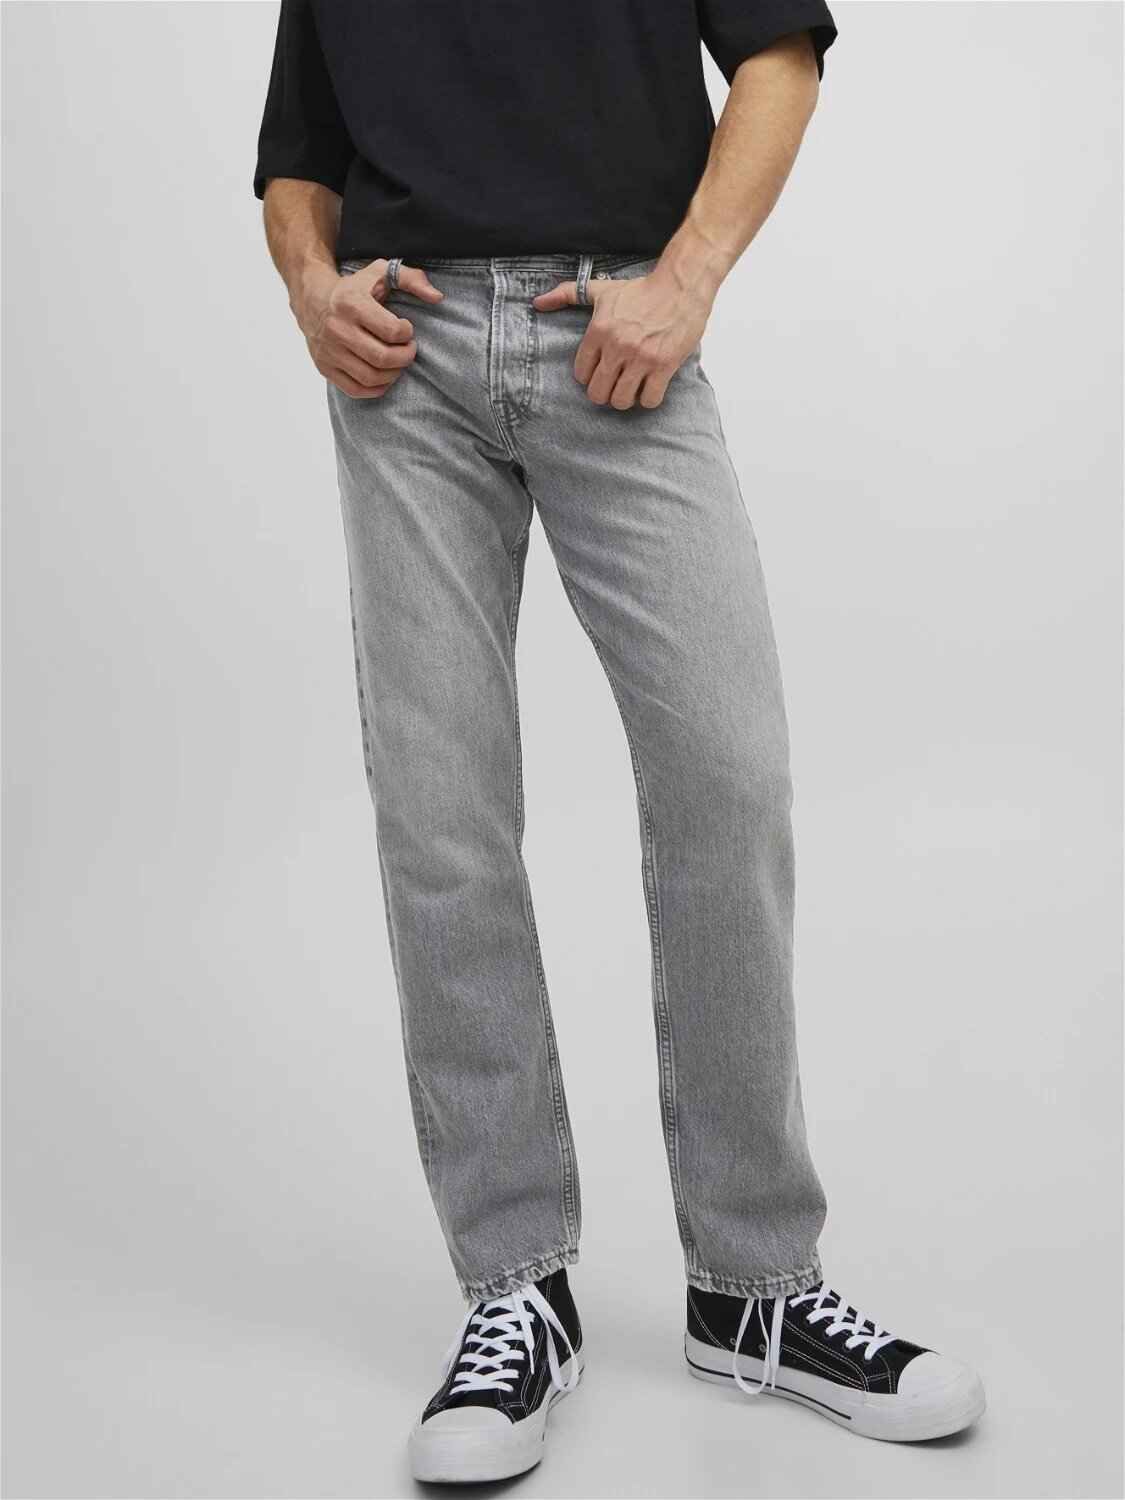 Jeans Chris Original - Grey Denim